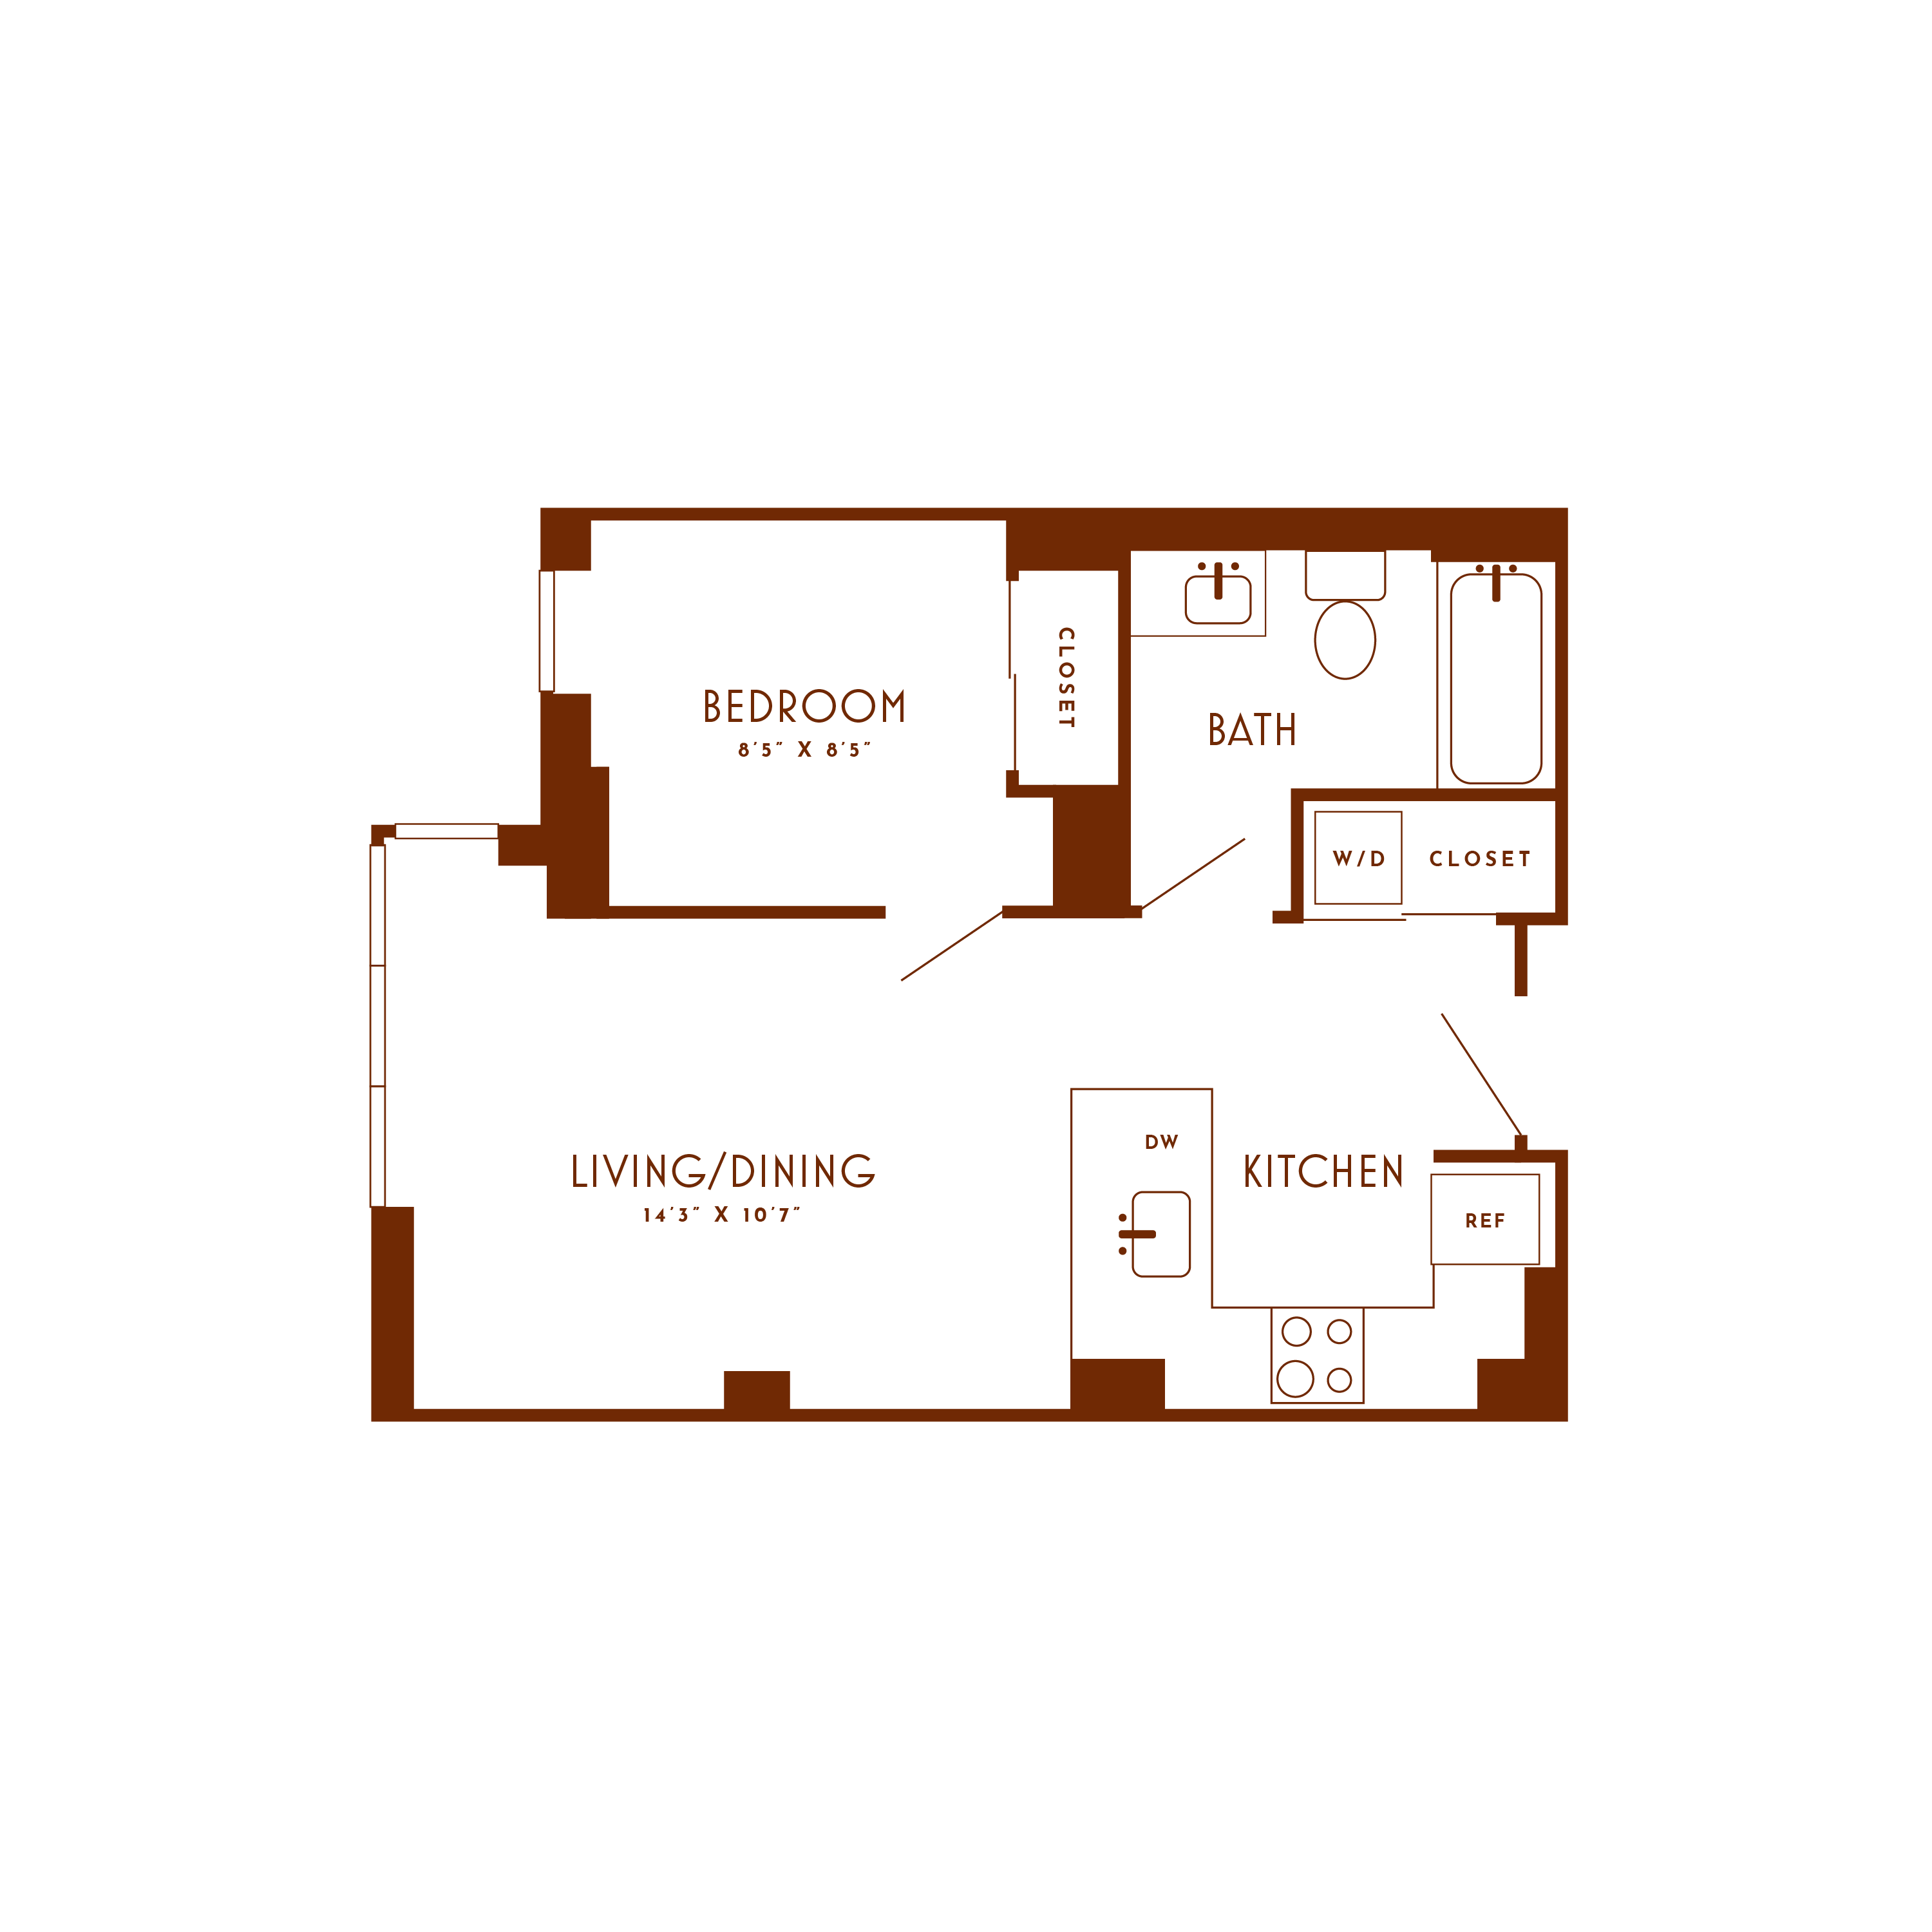 Floor plan image of unit 504